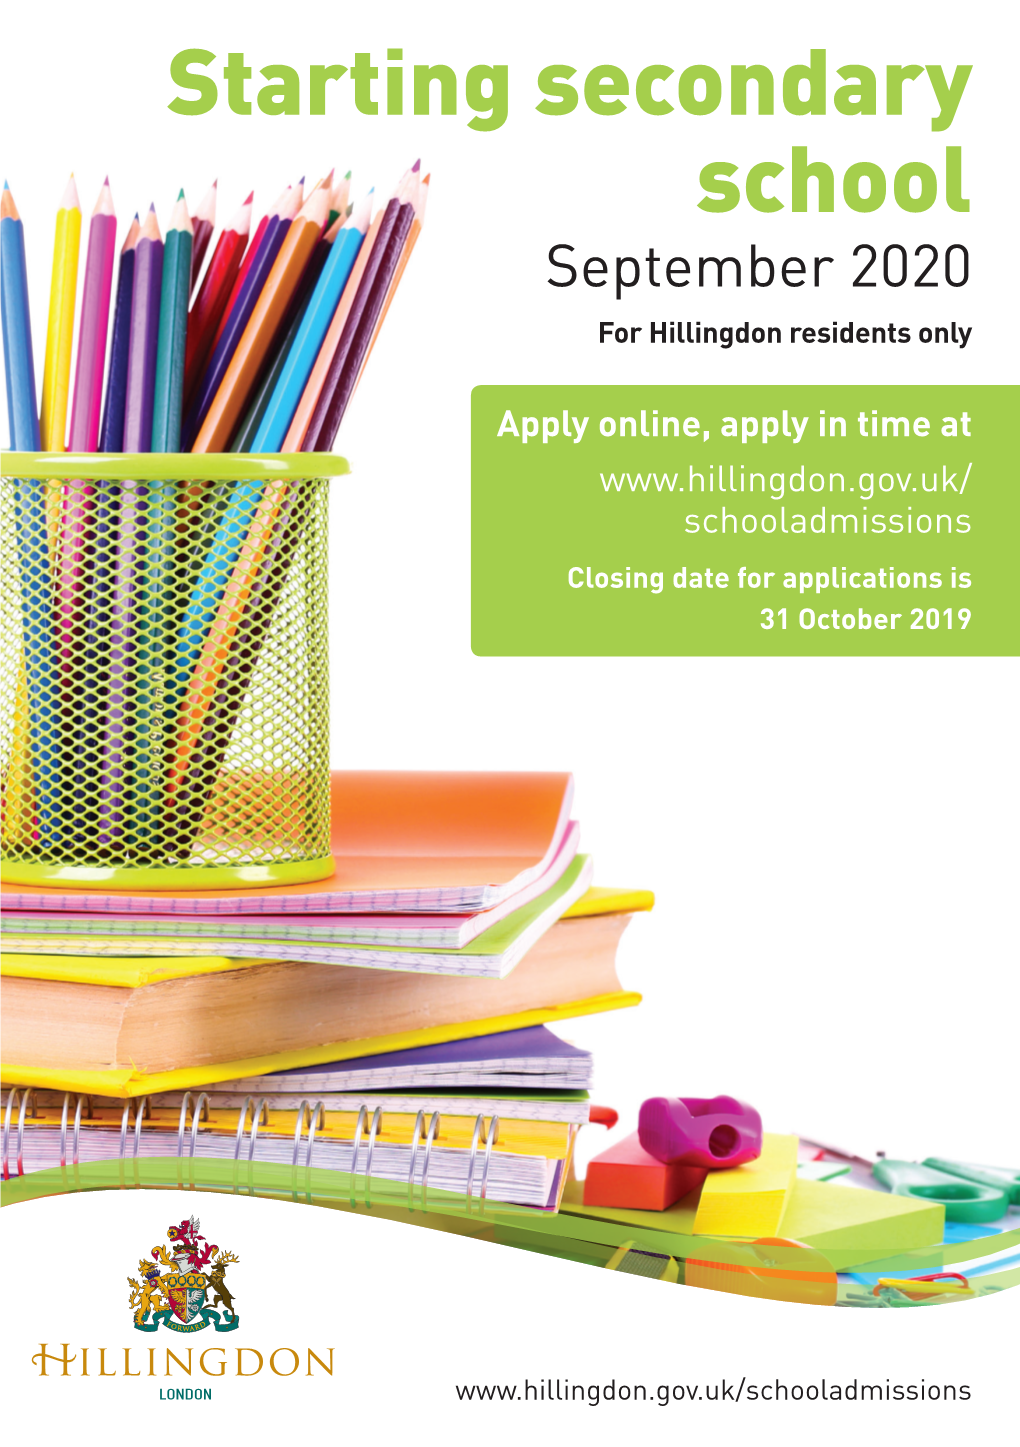 Starting Secondary School September 2020 for Hillingdon Residents Only